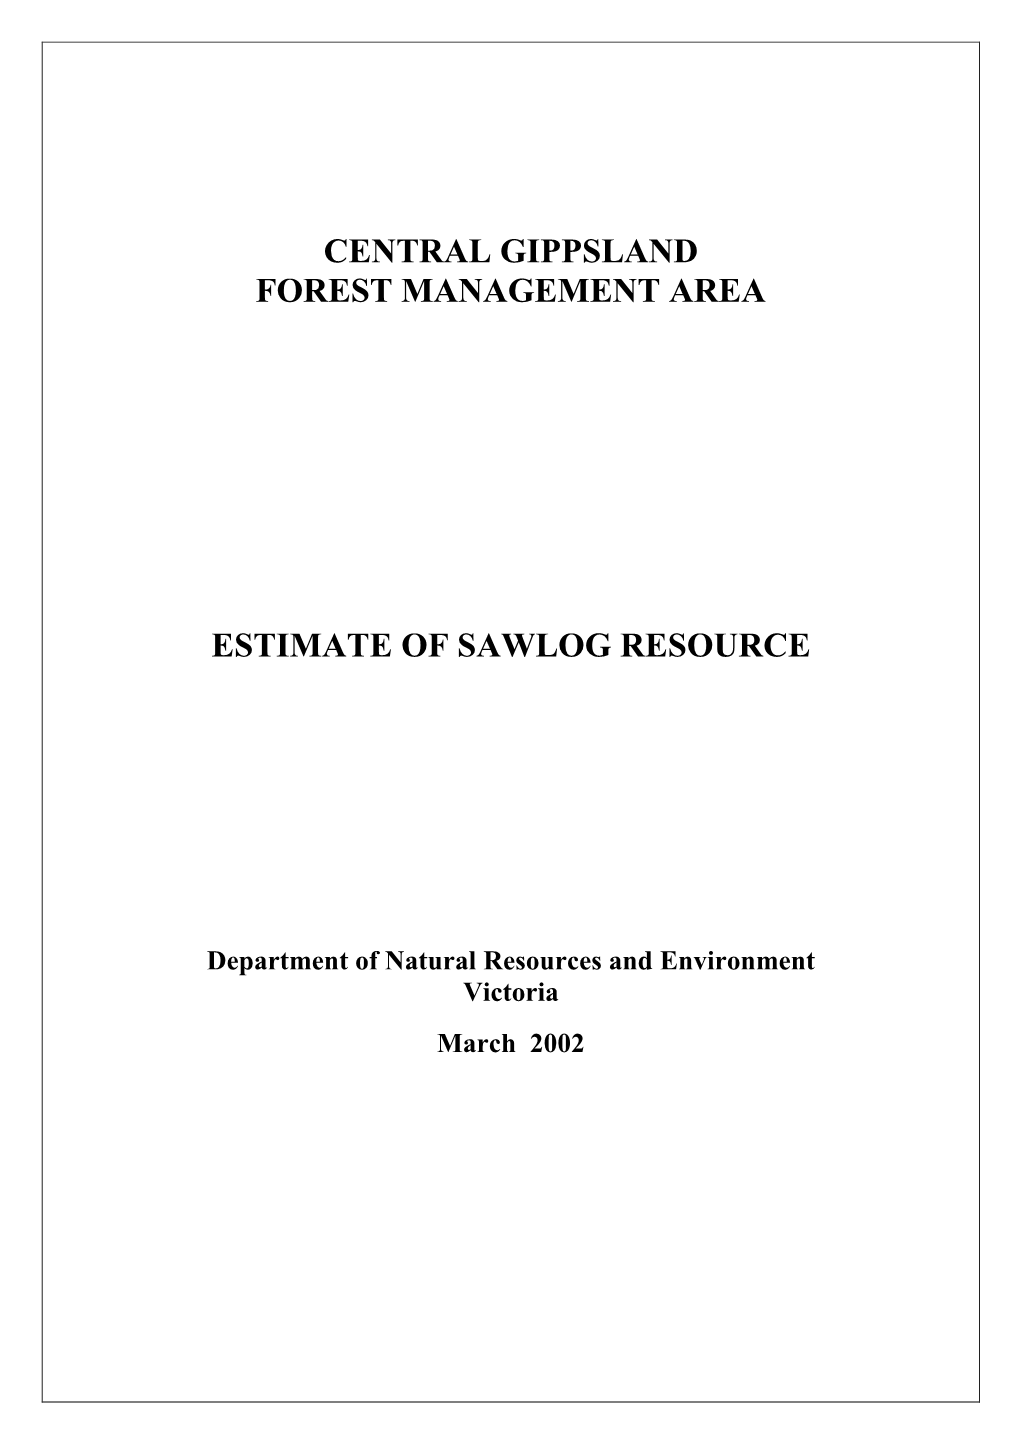 Central Gippsland Forest Management Area Estimate of Sawlog Resource